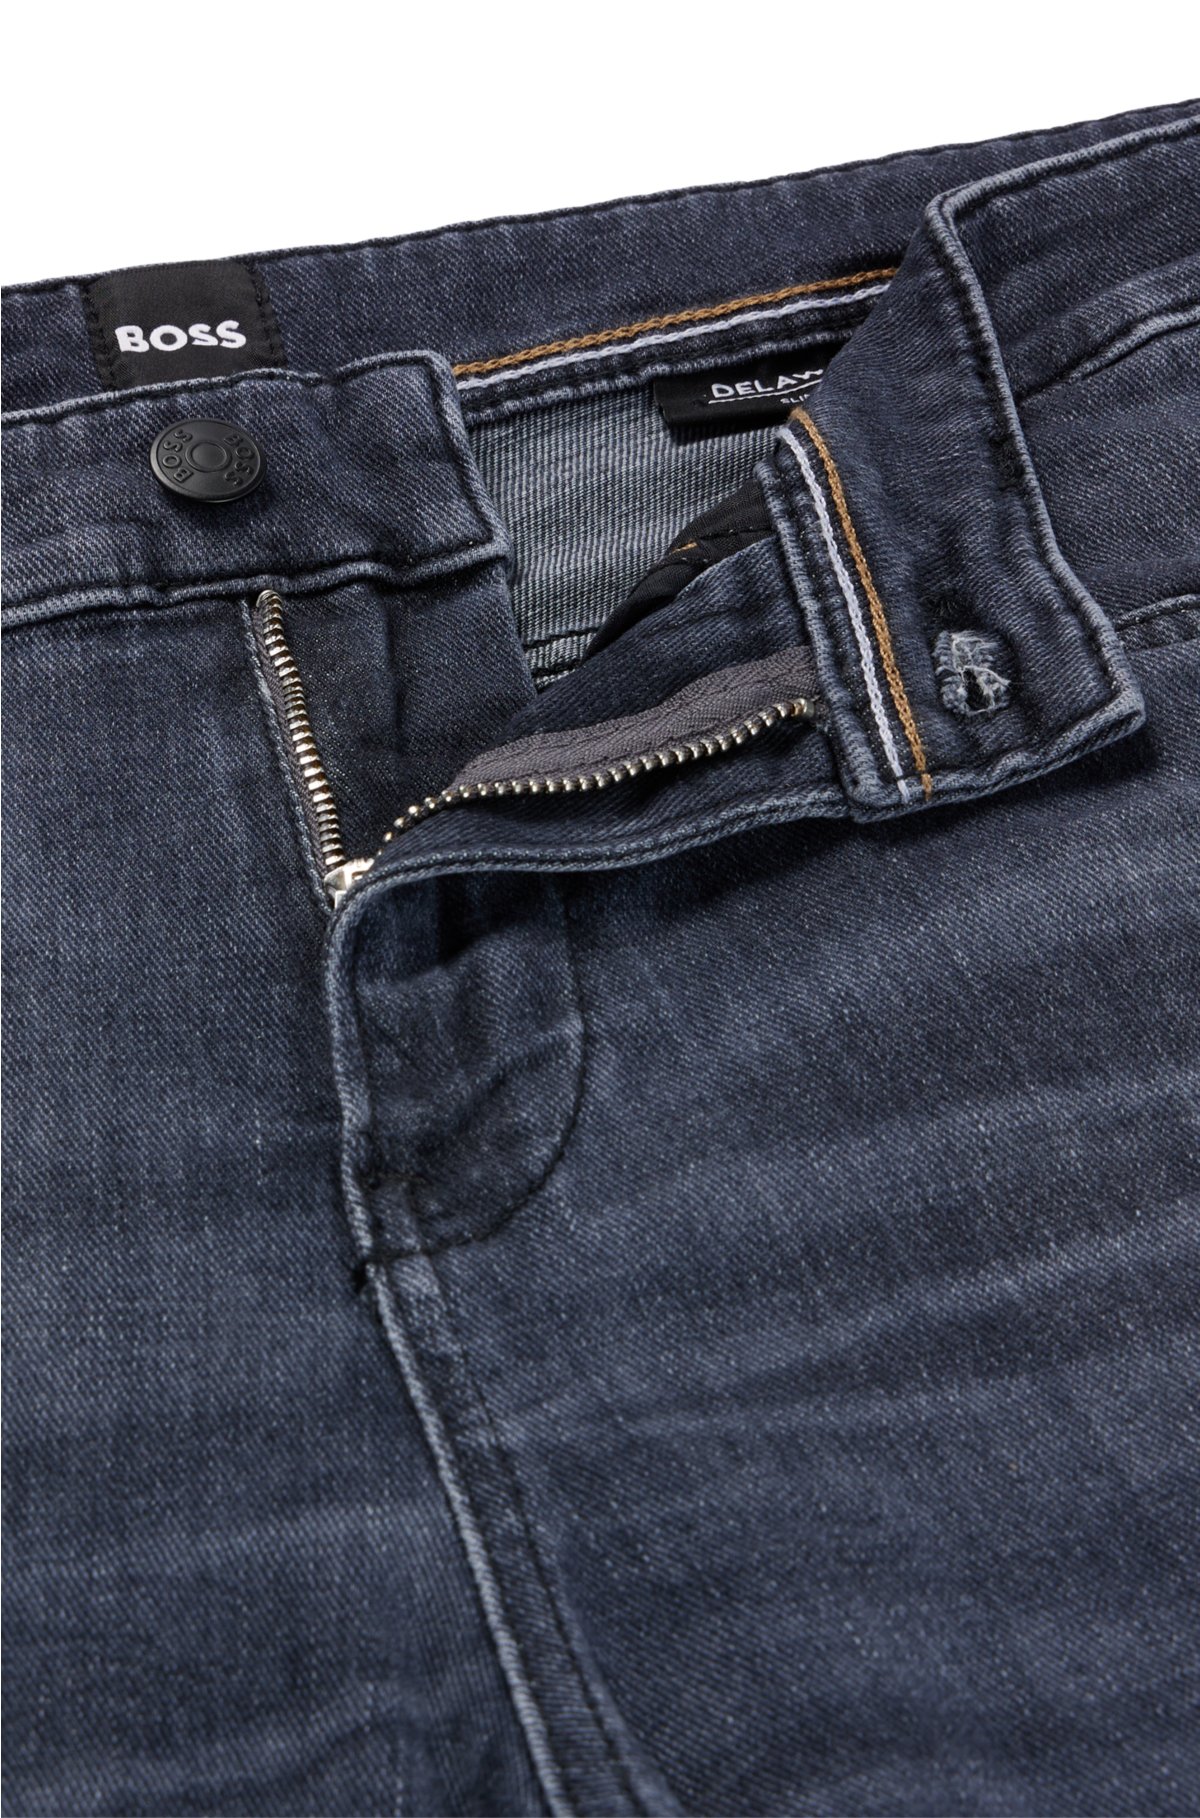 skyld lys s band BOSS - Slim-fit jeans in dark-blue denim